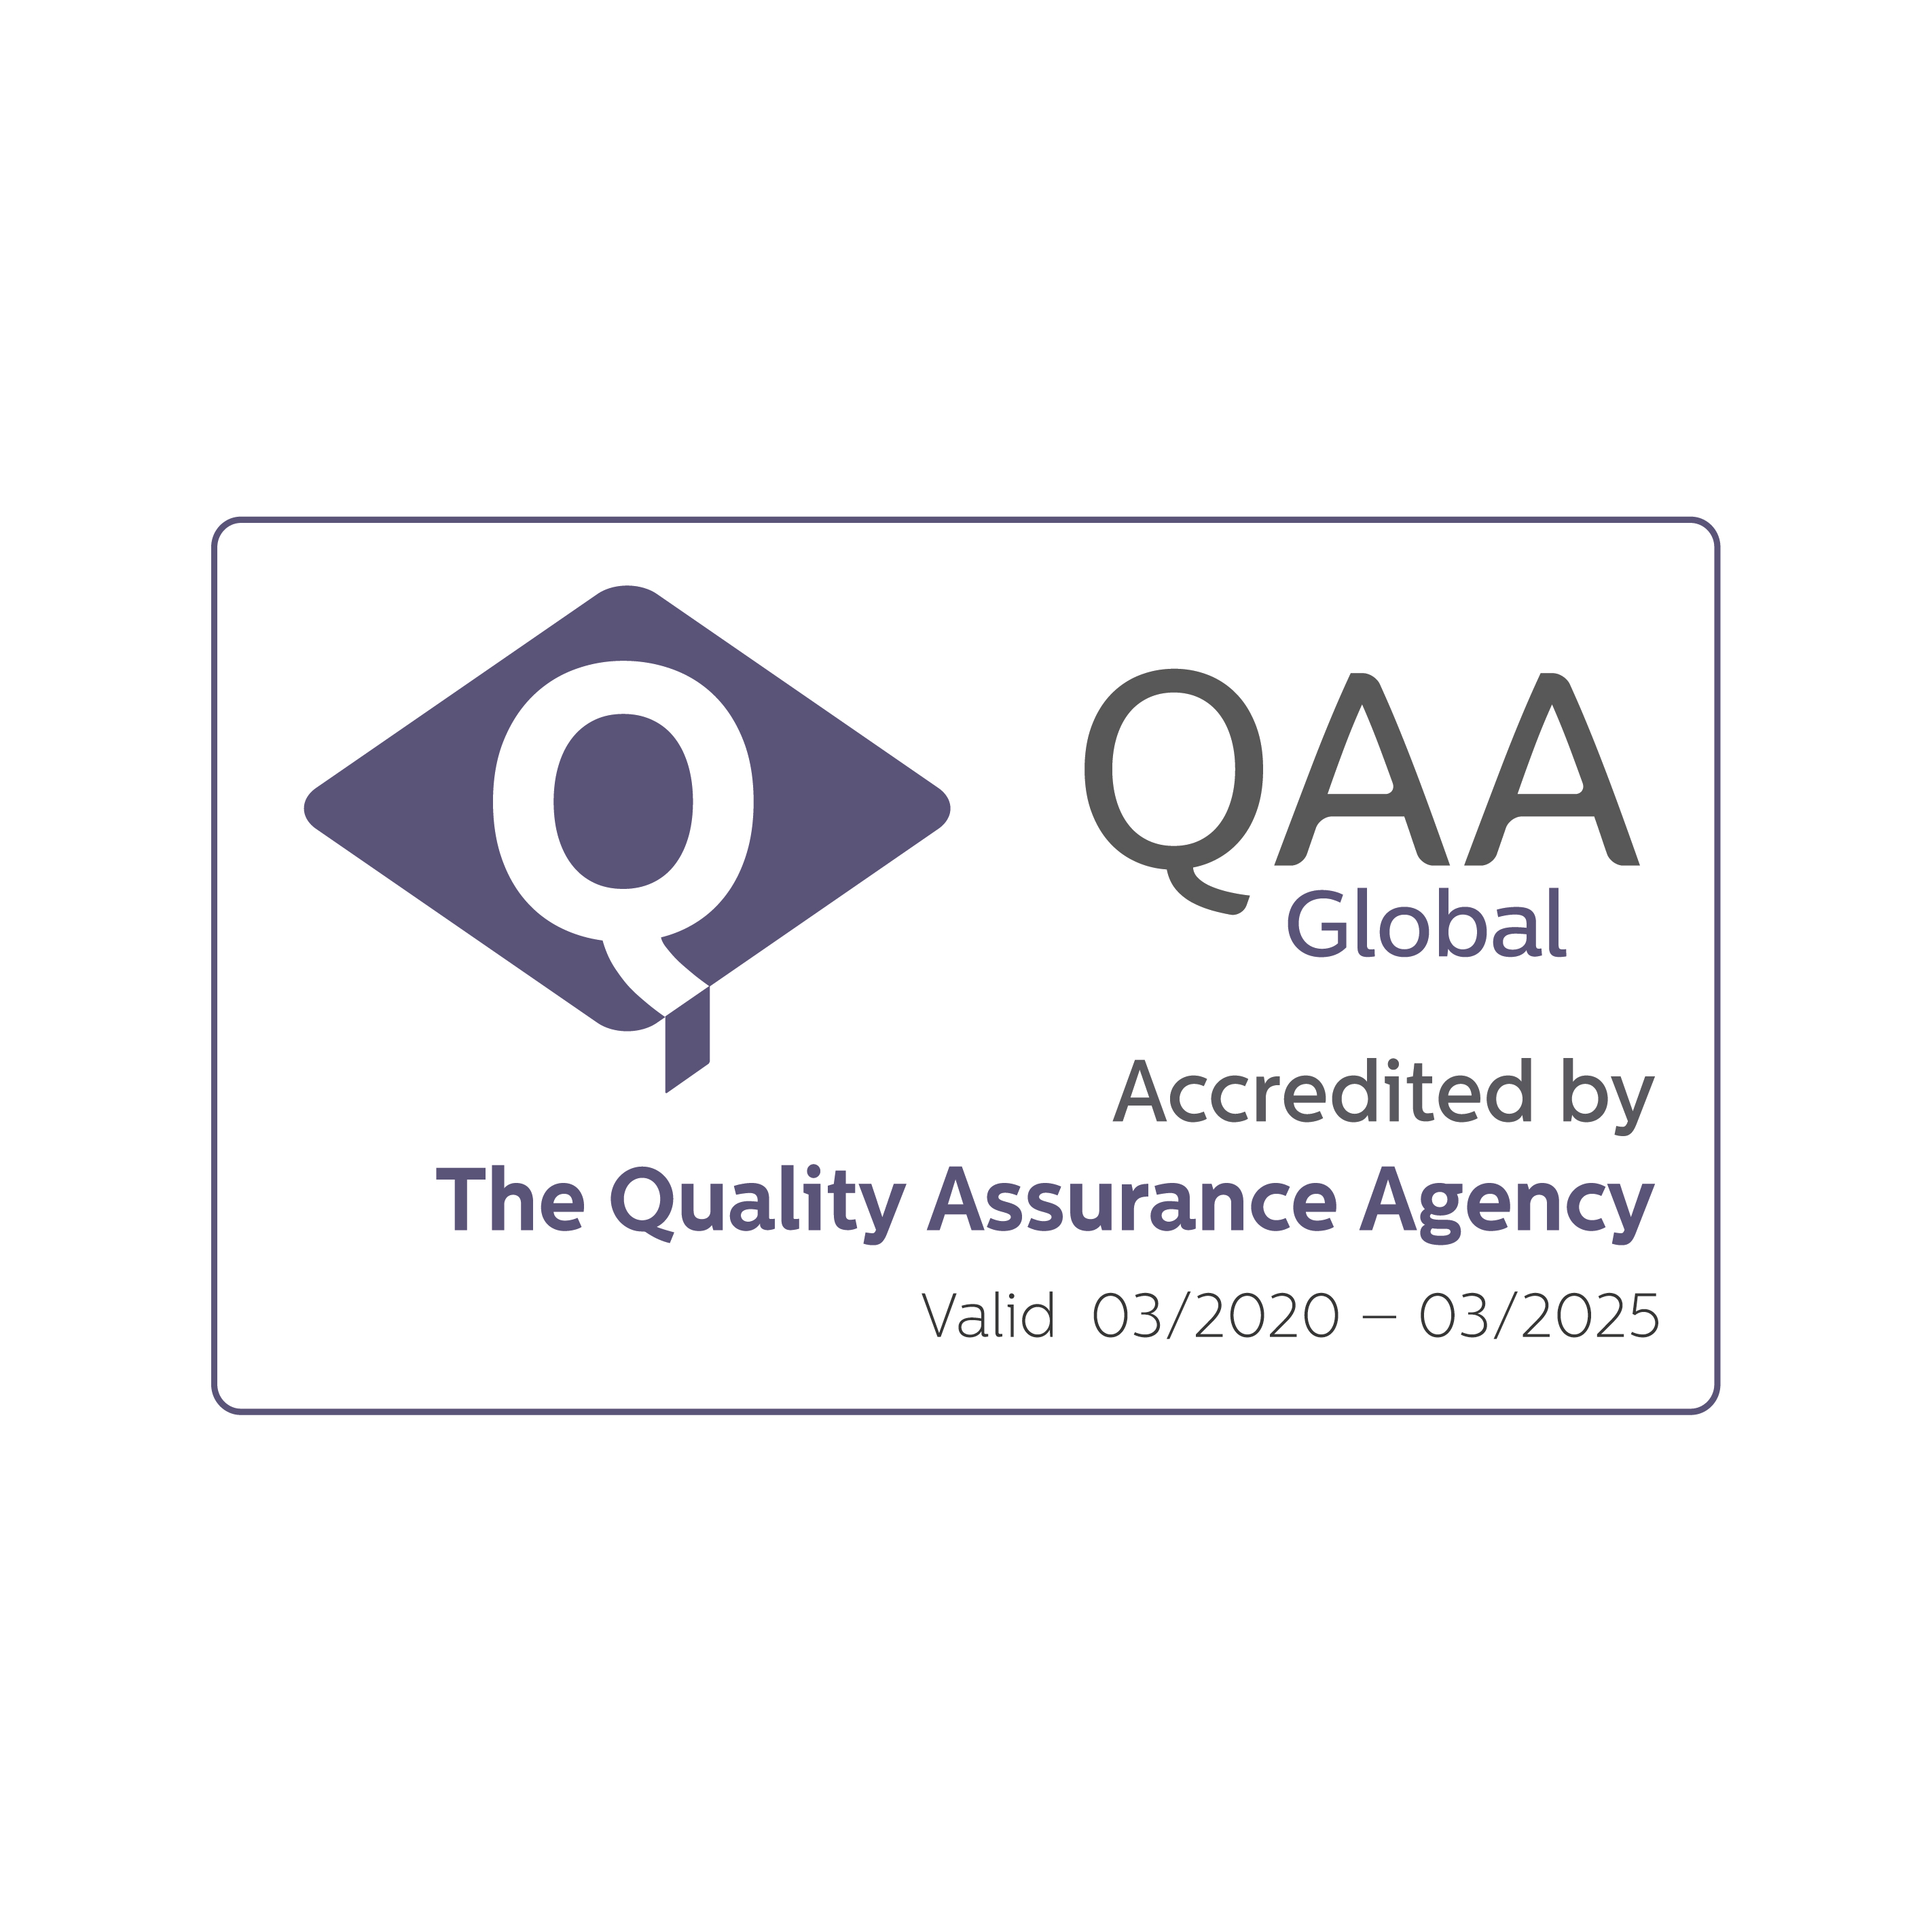 Quality Assurance Agency (QAA)